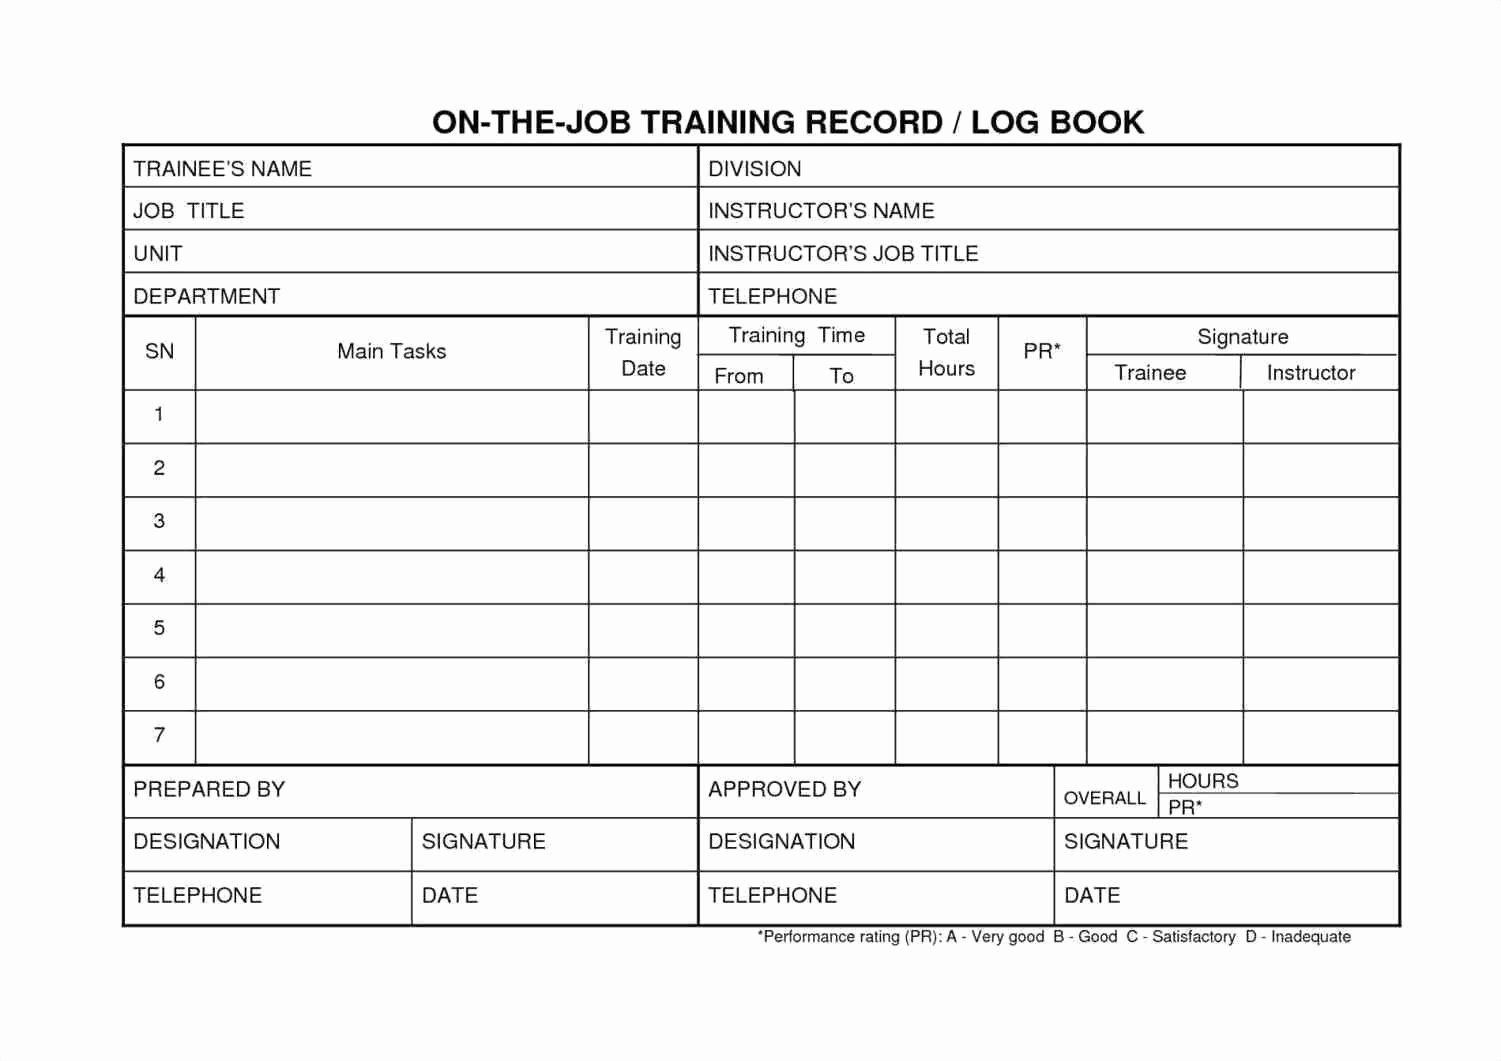 Employee Training Matrix Template Excel Awesome Employee Training Record Template Excel Luxury Template